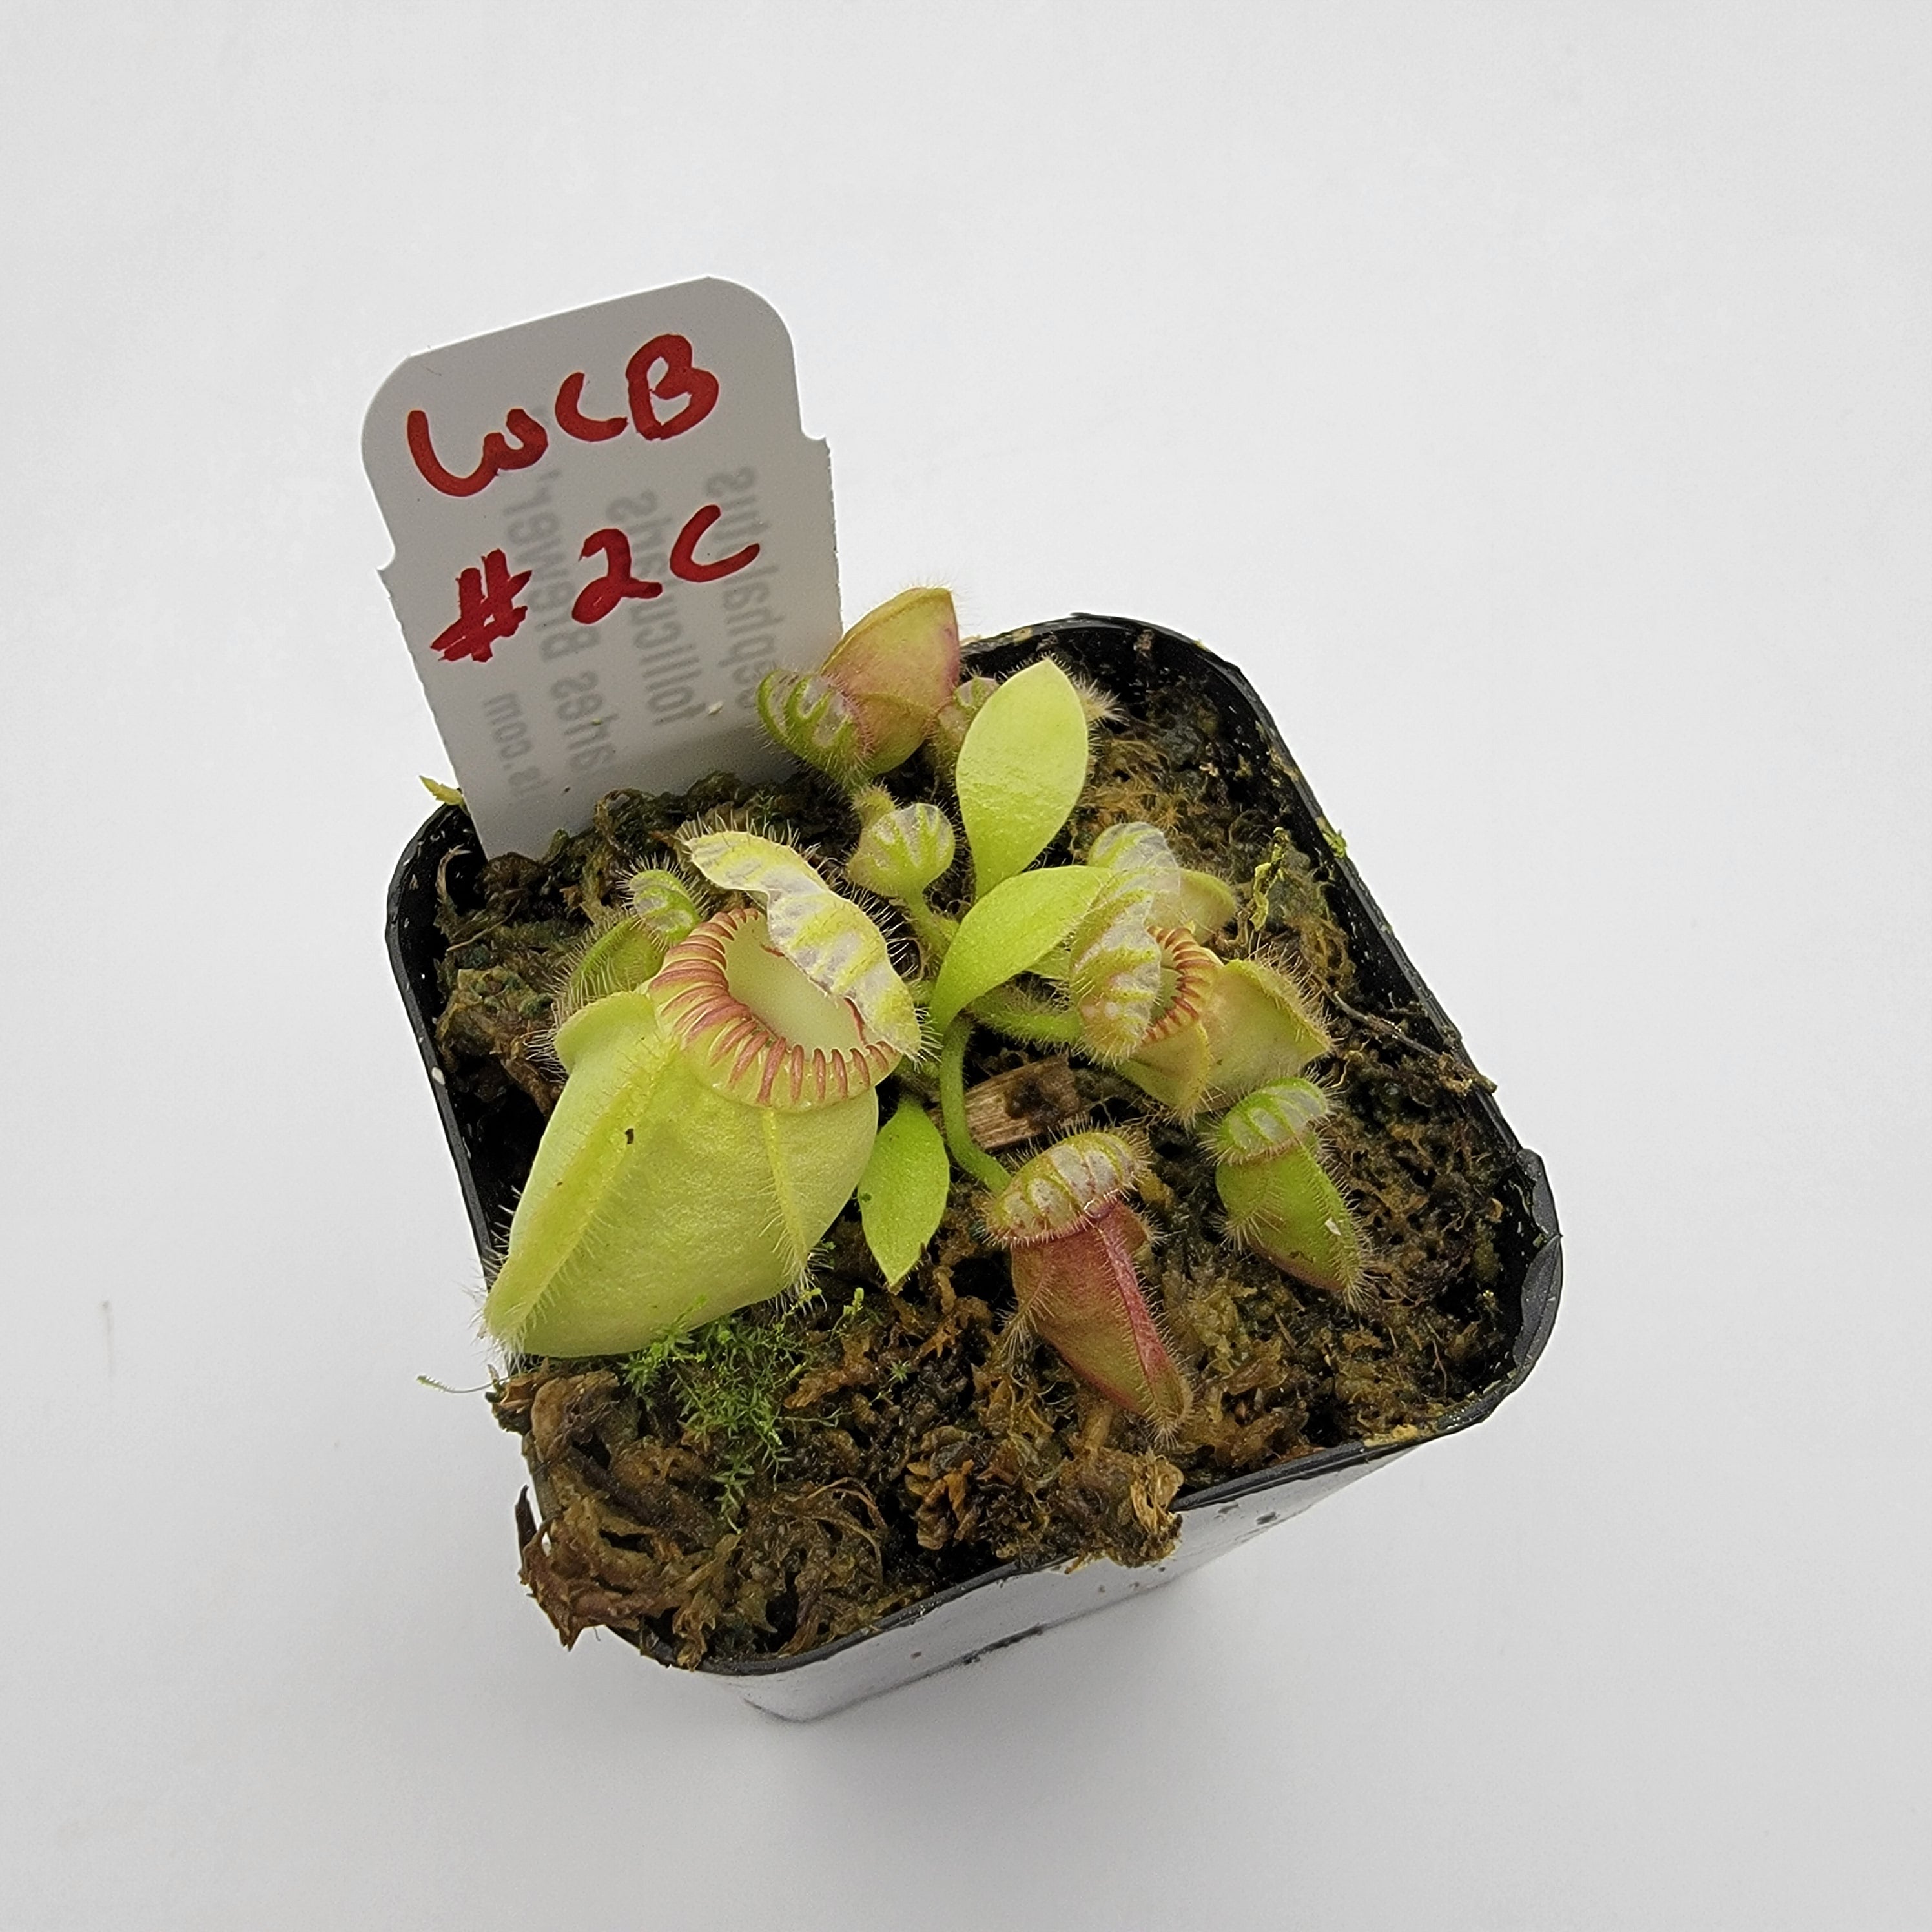 Cephalotus follicularis "Charles Brewer's" clone WCB (1C-16C) - Rainbow Carnivorous Plants LLC